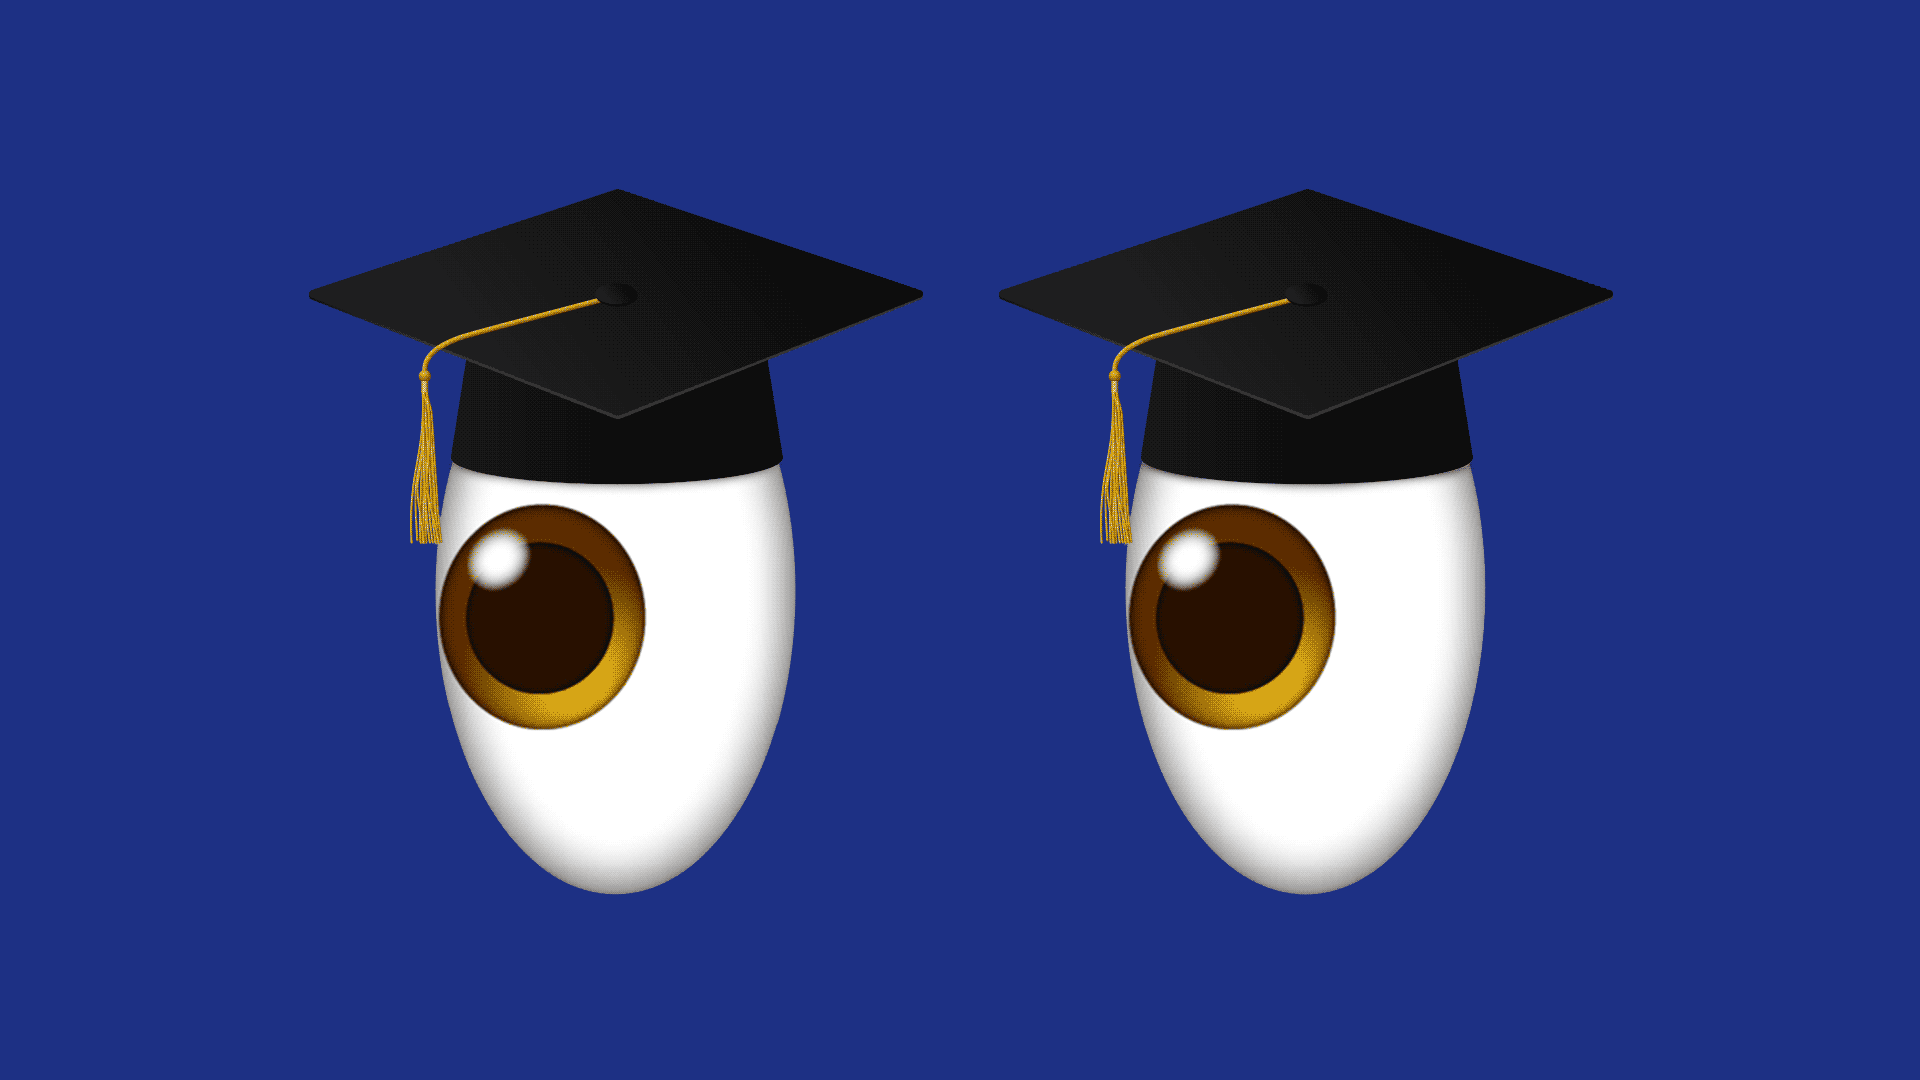 Illustration of eyeballs wearing graduation cap